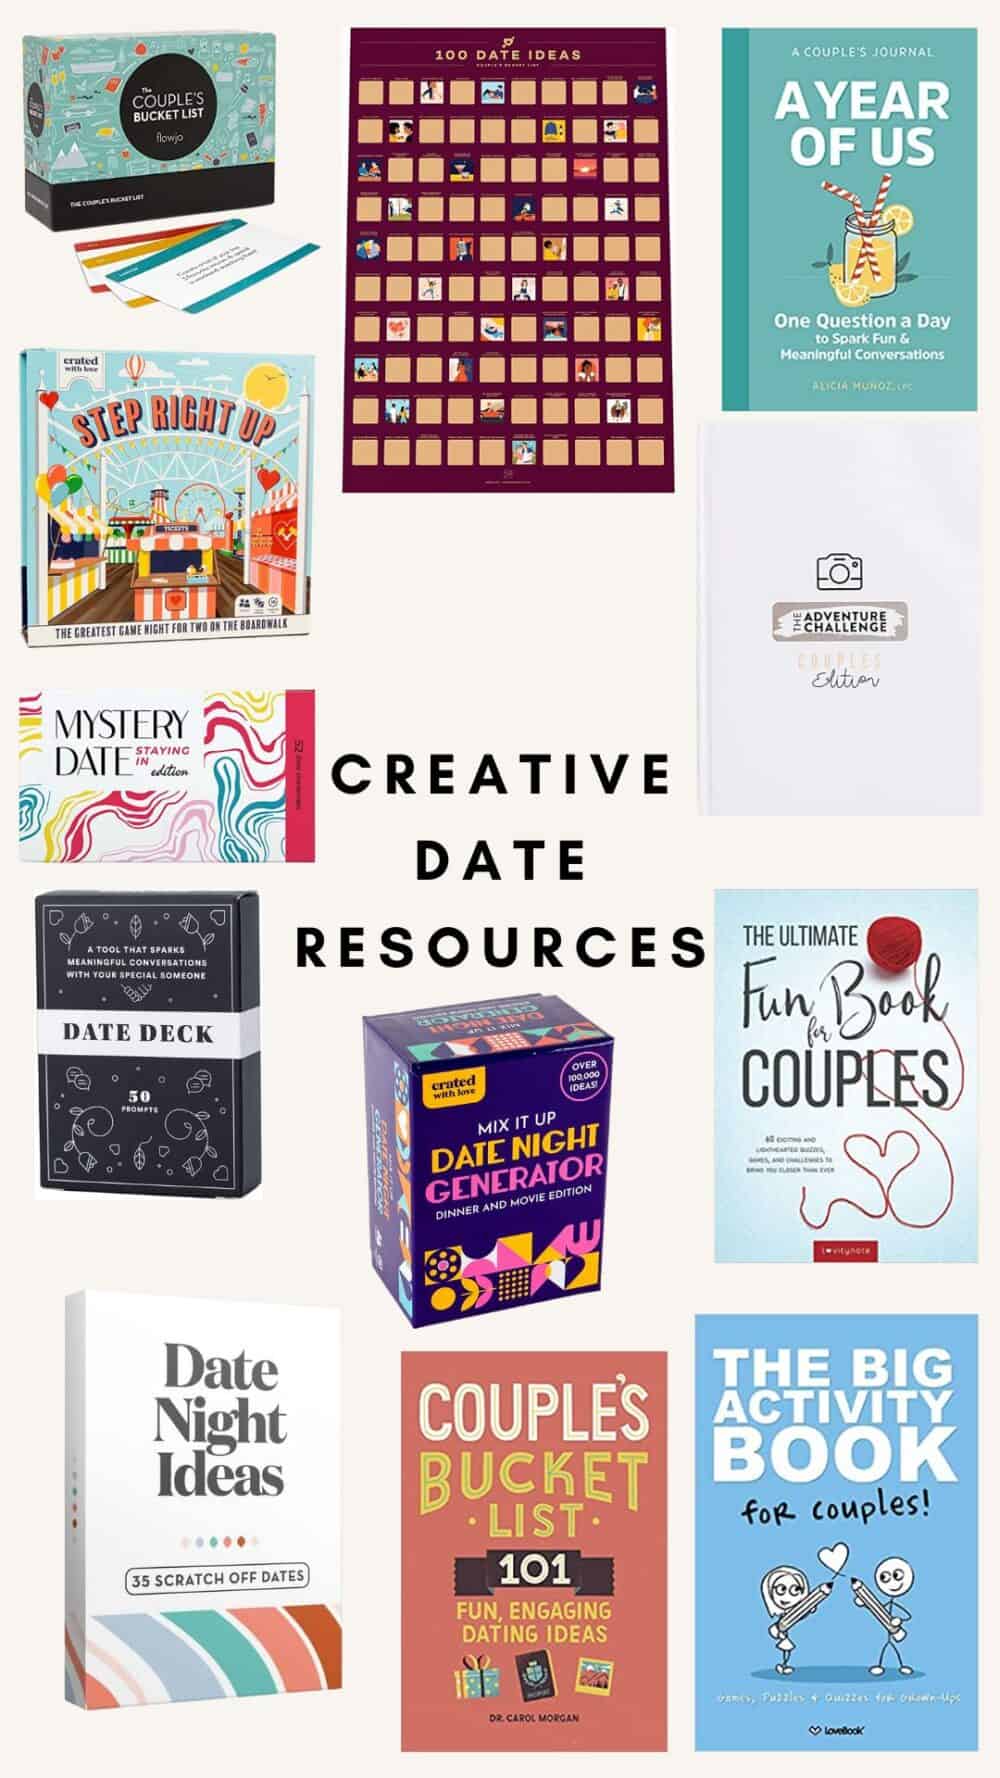 Creative date ideas roundup